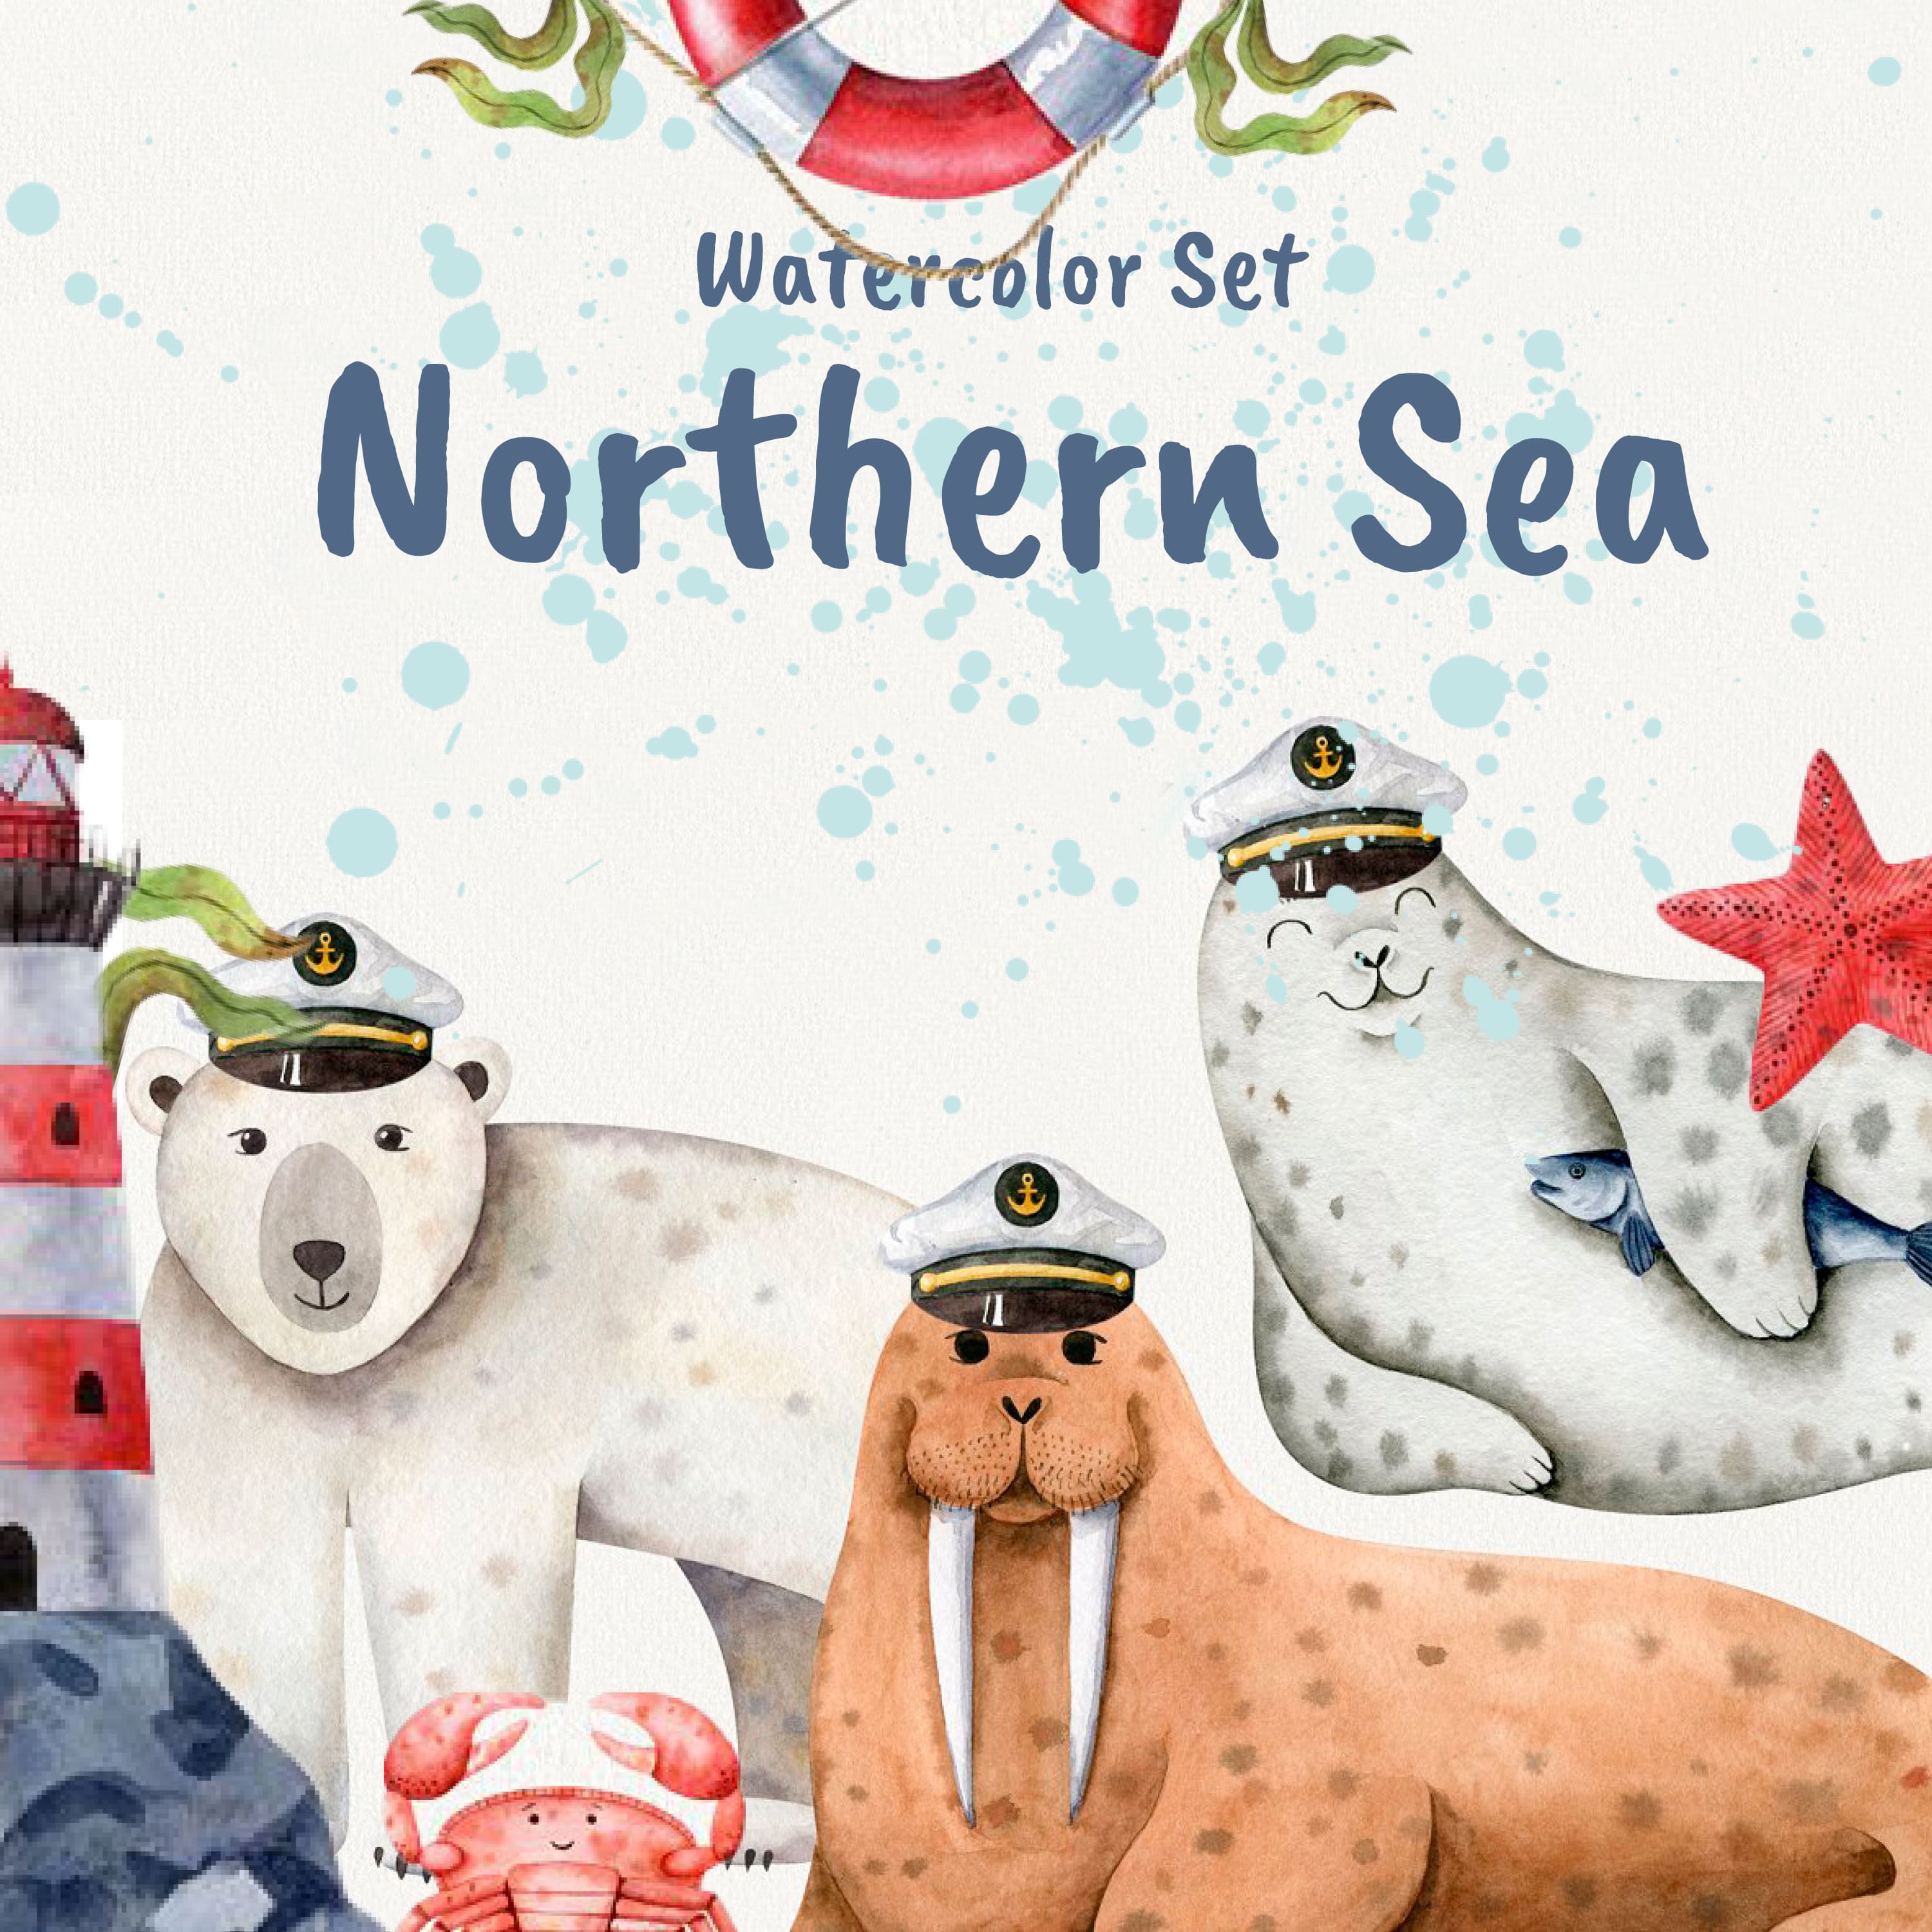 Northern Sea Watercolor Set cover.